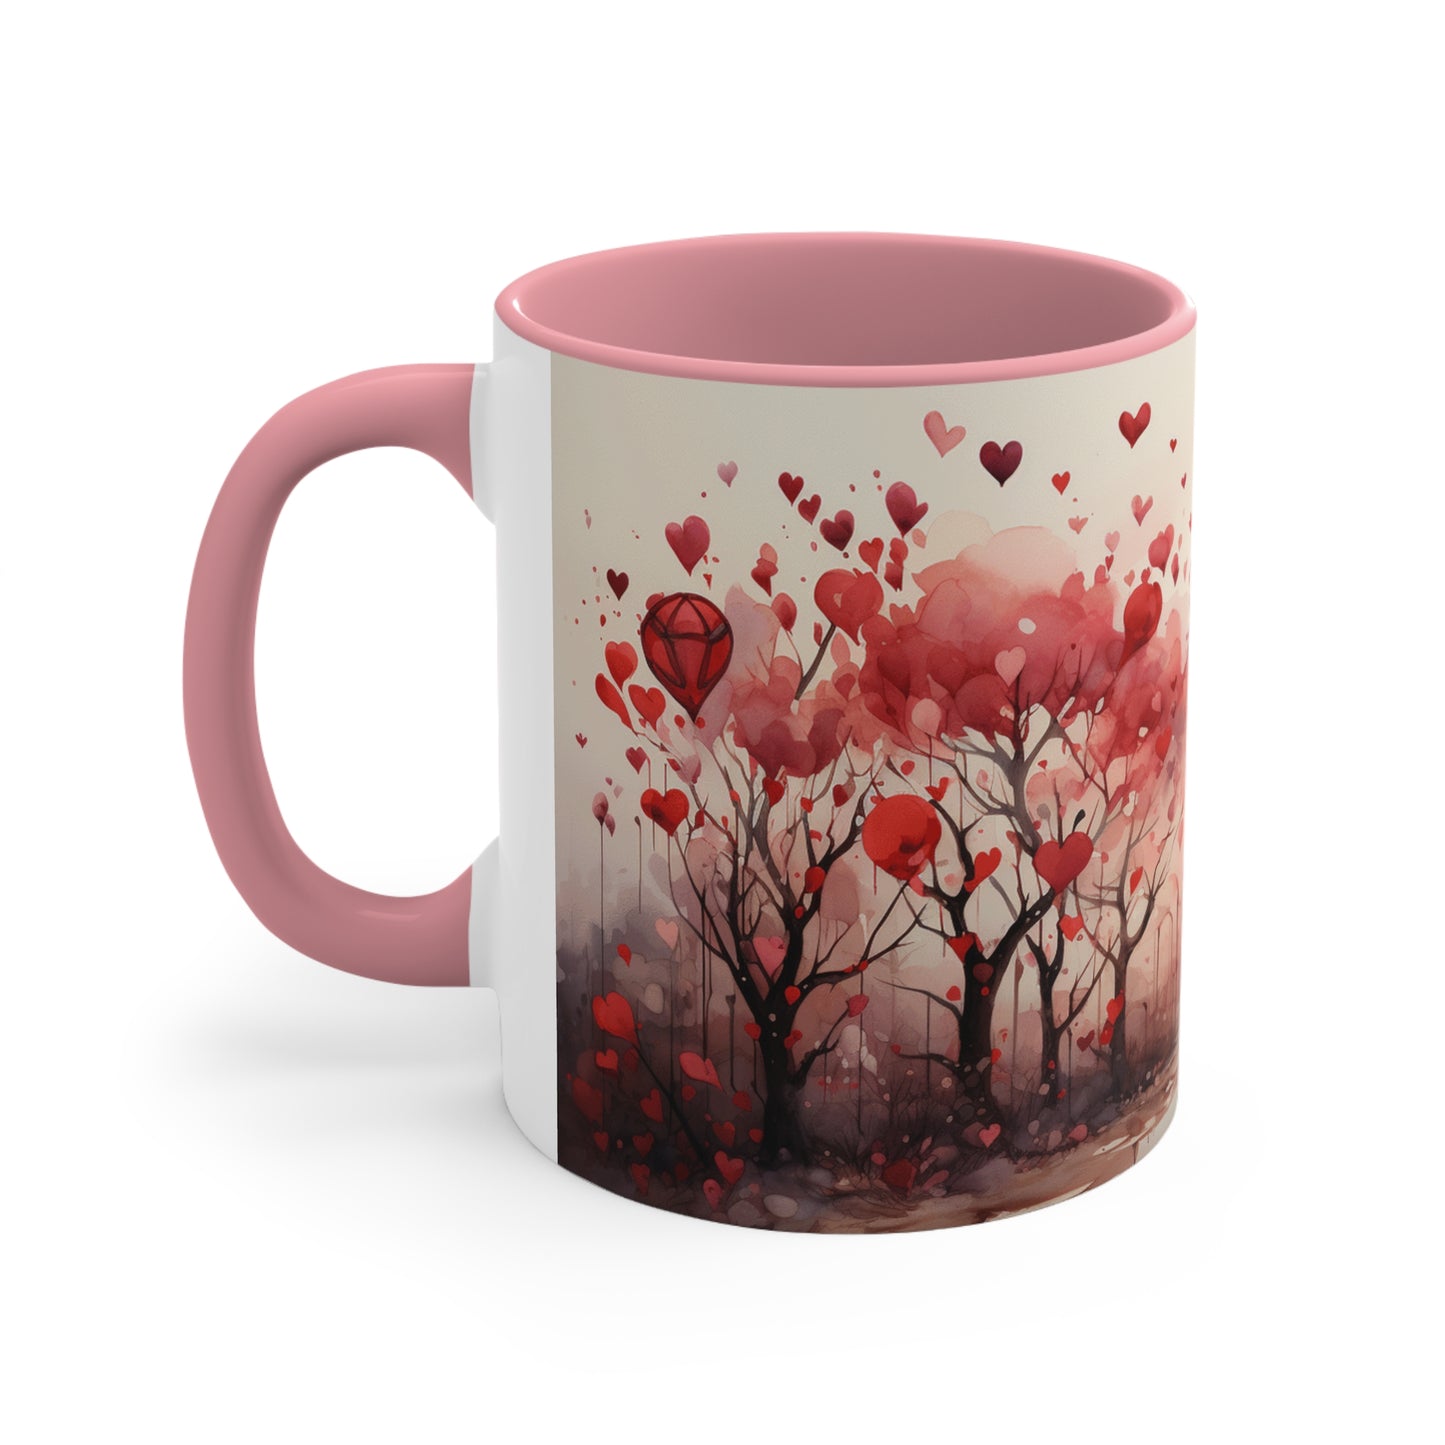 Whispers of Love mug, Valentine's Day, Accent Coffee Mug, 11oz mug, valentines gift, gift for her, be mine, heart mug, love you, couples